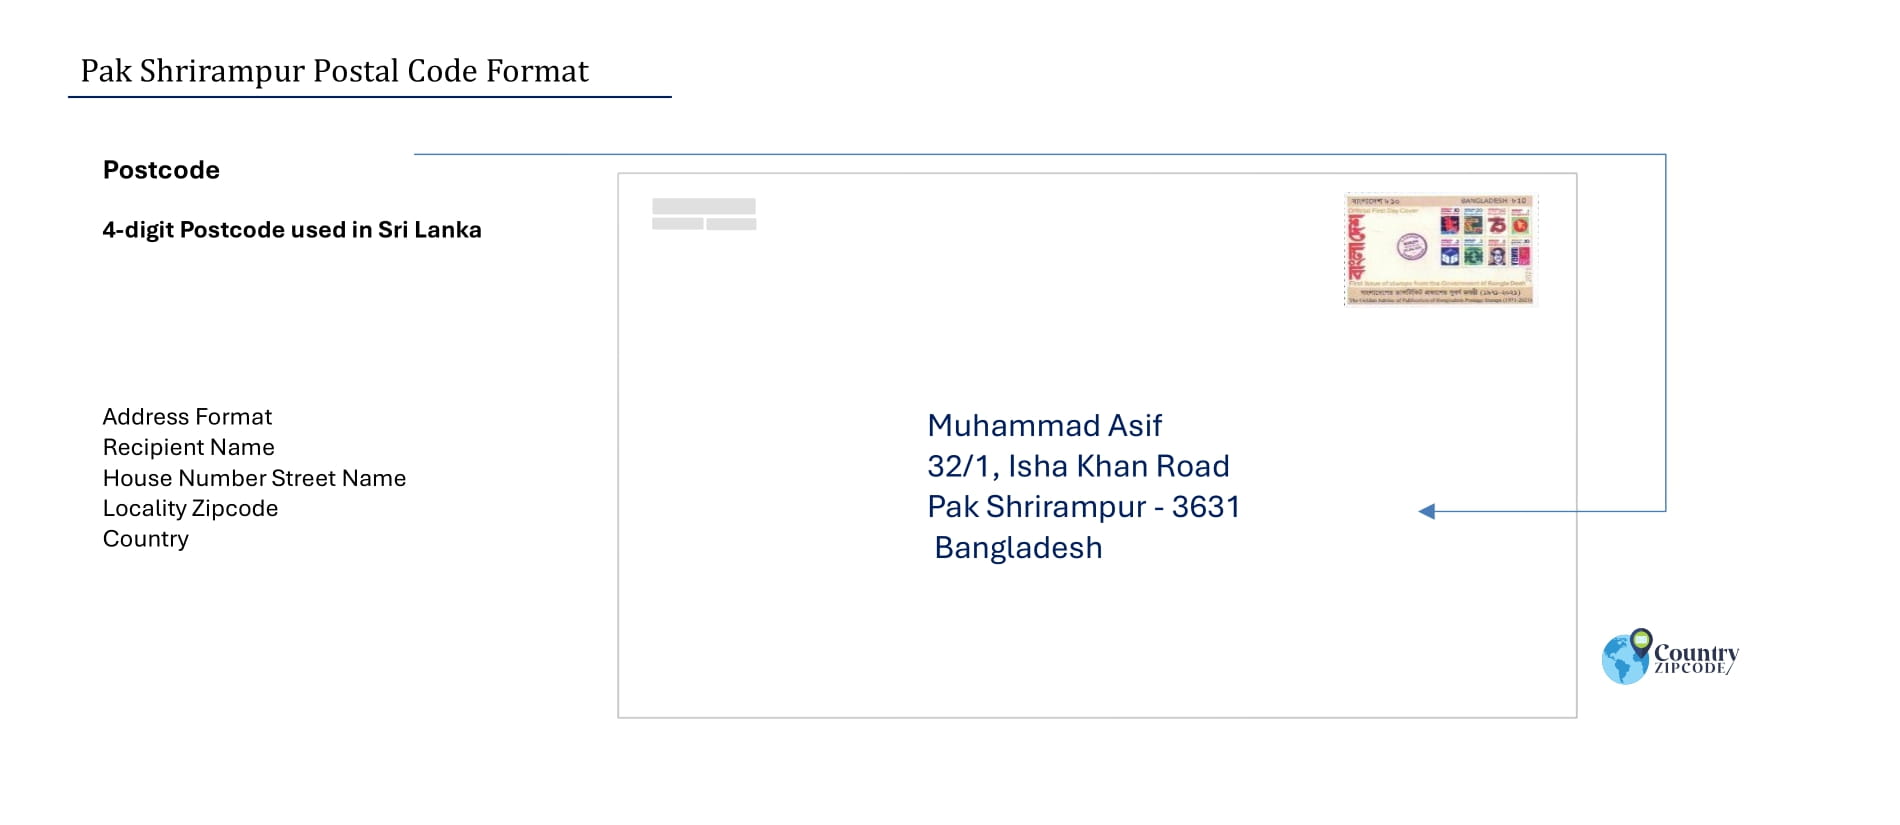 Pak Shrirampur Postal code format